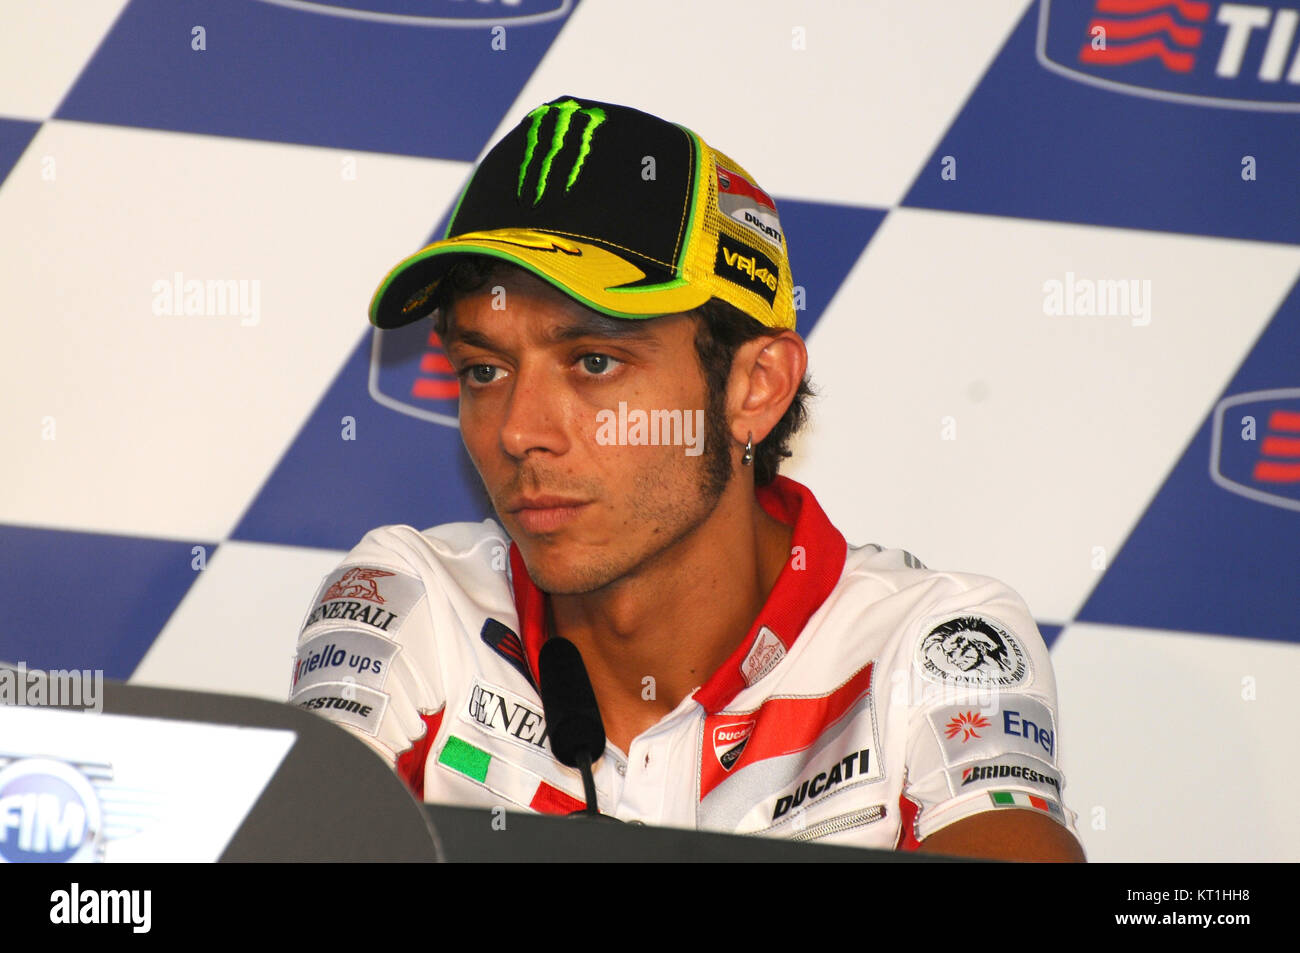 MUGELLO - ITALY, JULY 13 2012: Italian Ducati rider Valentino Rossi during 2012 TIM MotoGP GP of Italy. Stock Photo